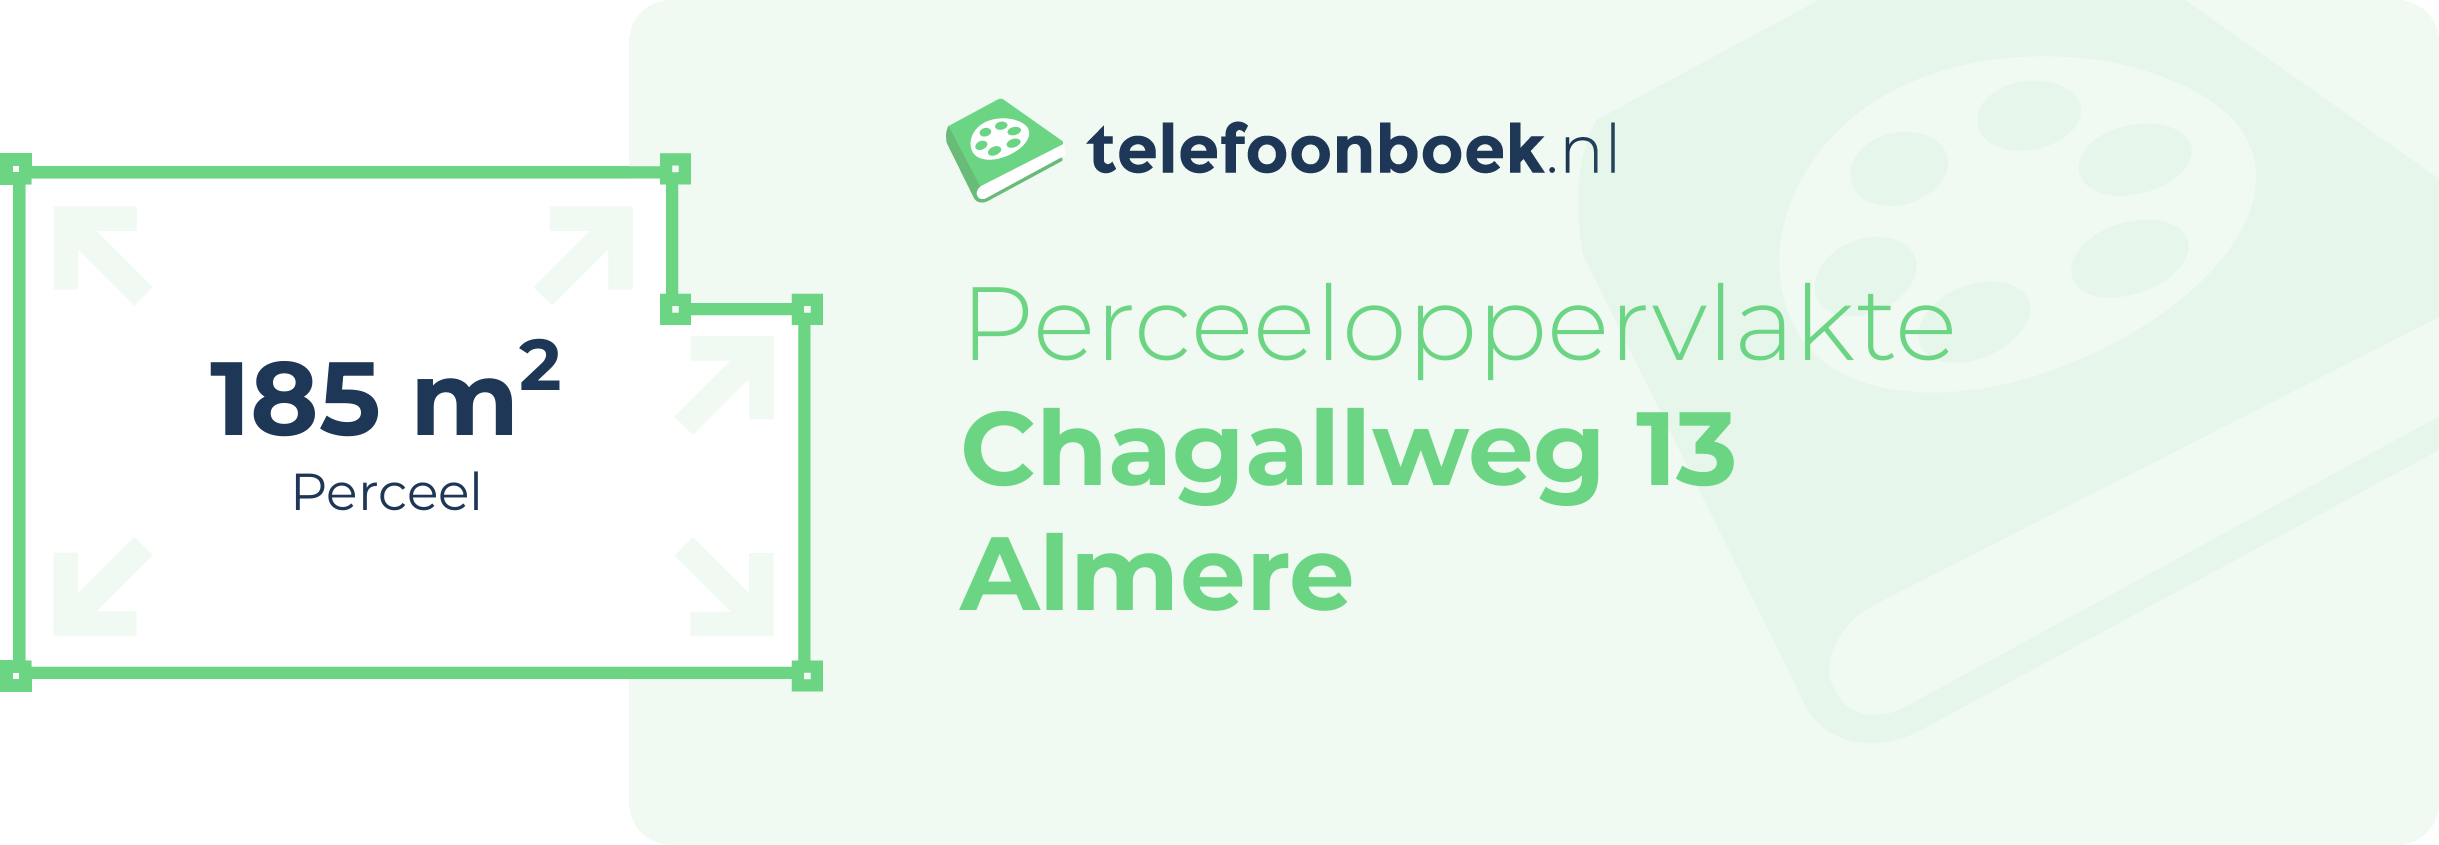 Perceeloppervlakte Chagallweg 13 Almere